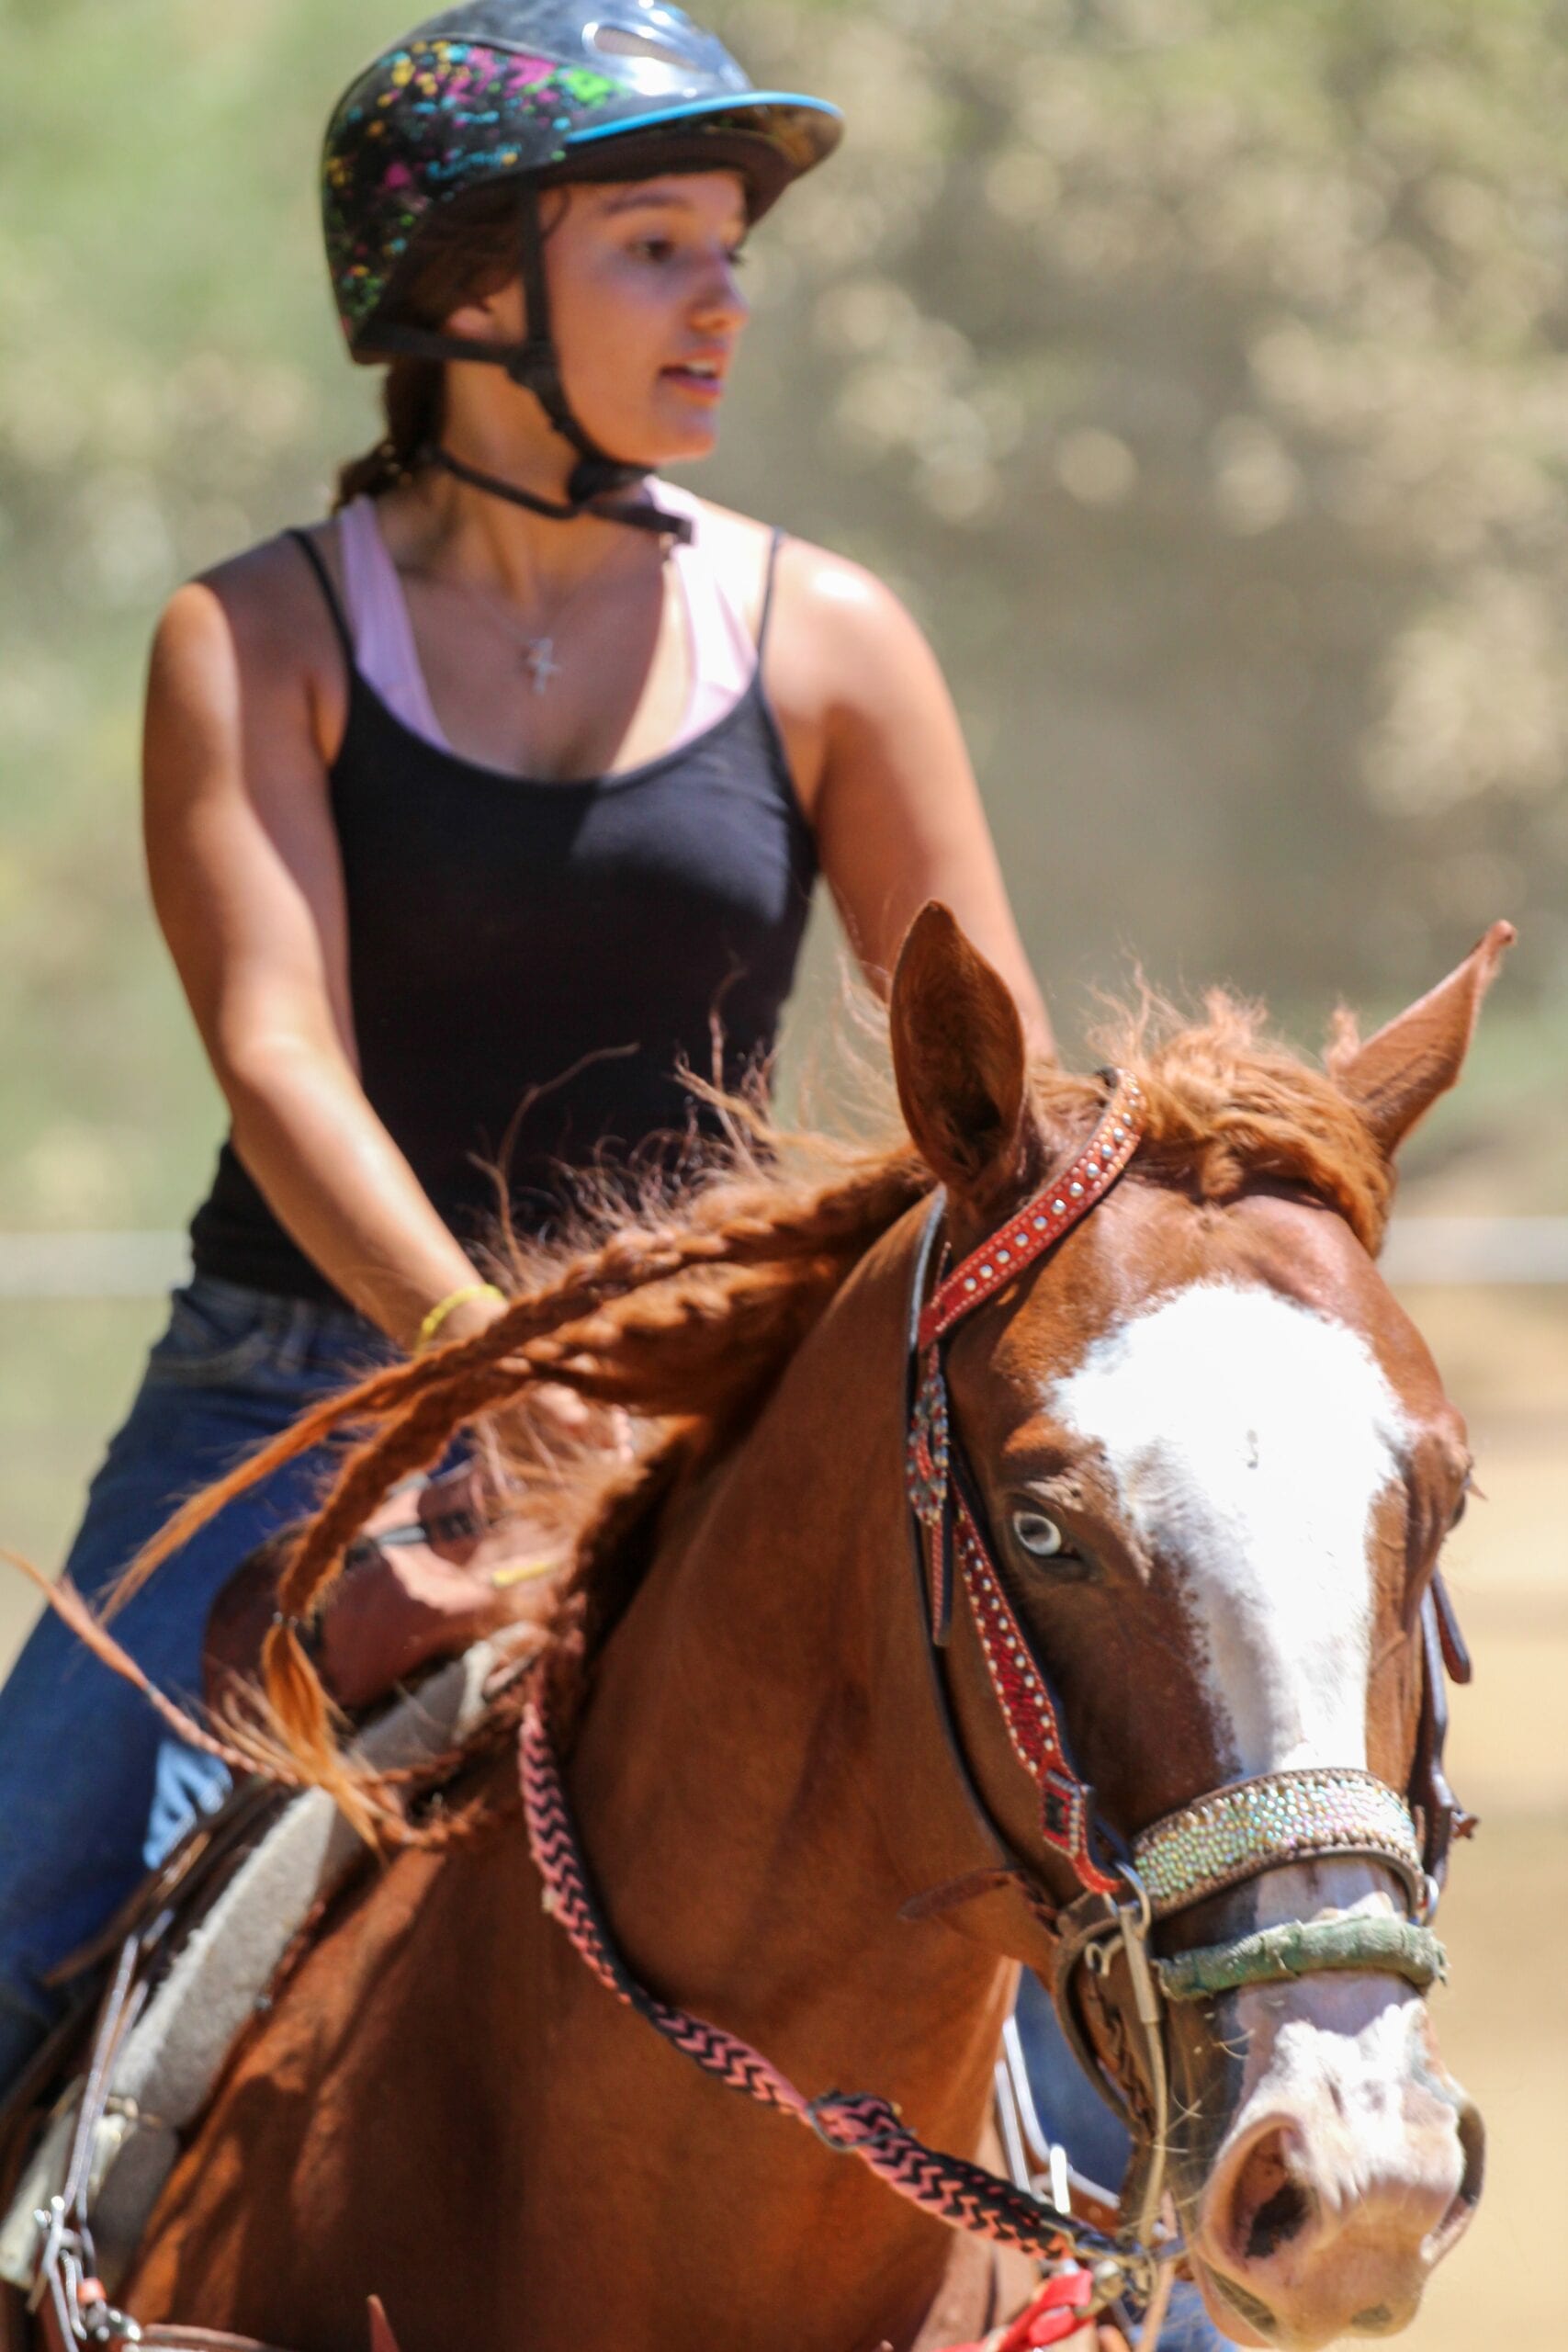 Photo by Christine Benton on Unsplash - Girl on a horse